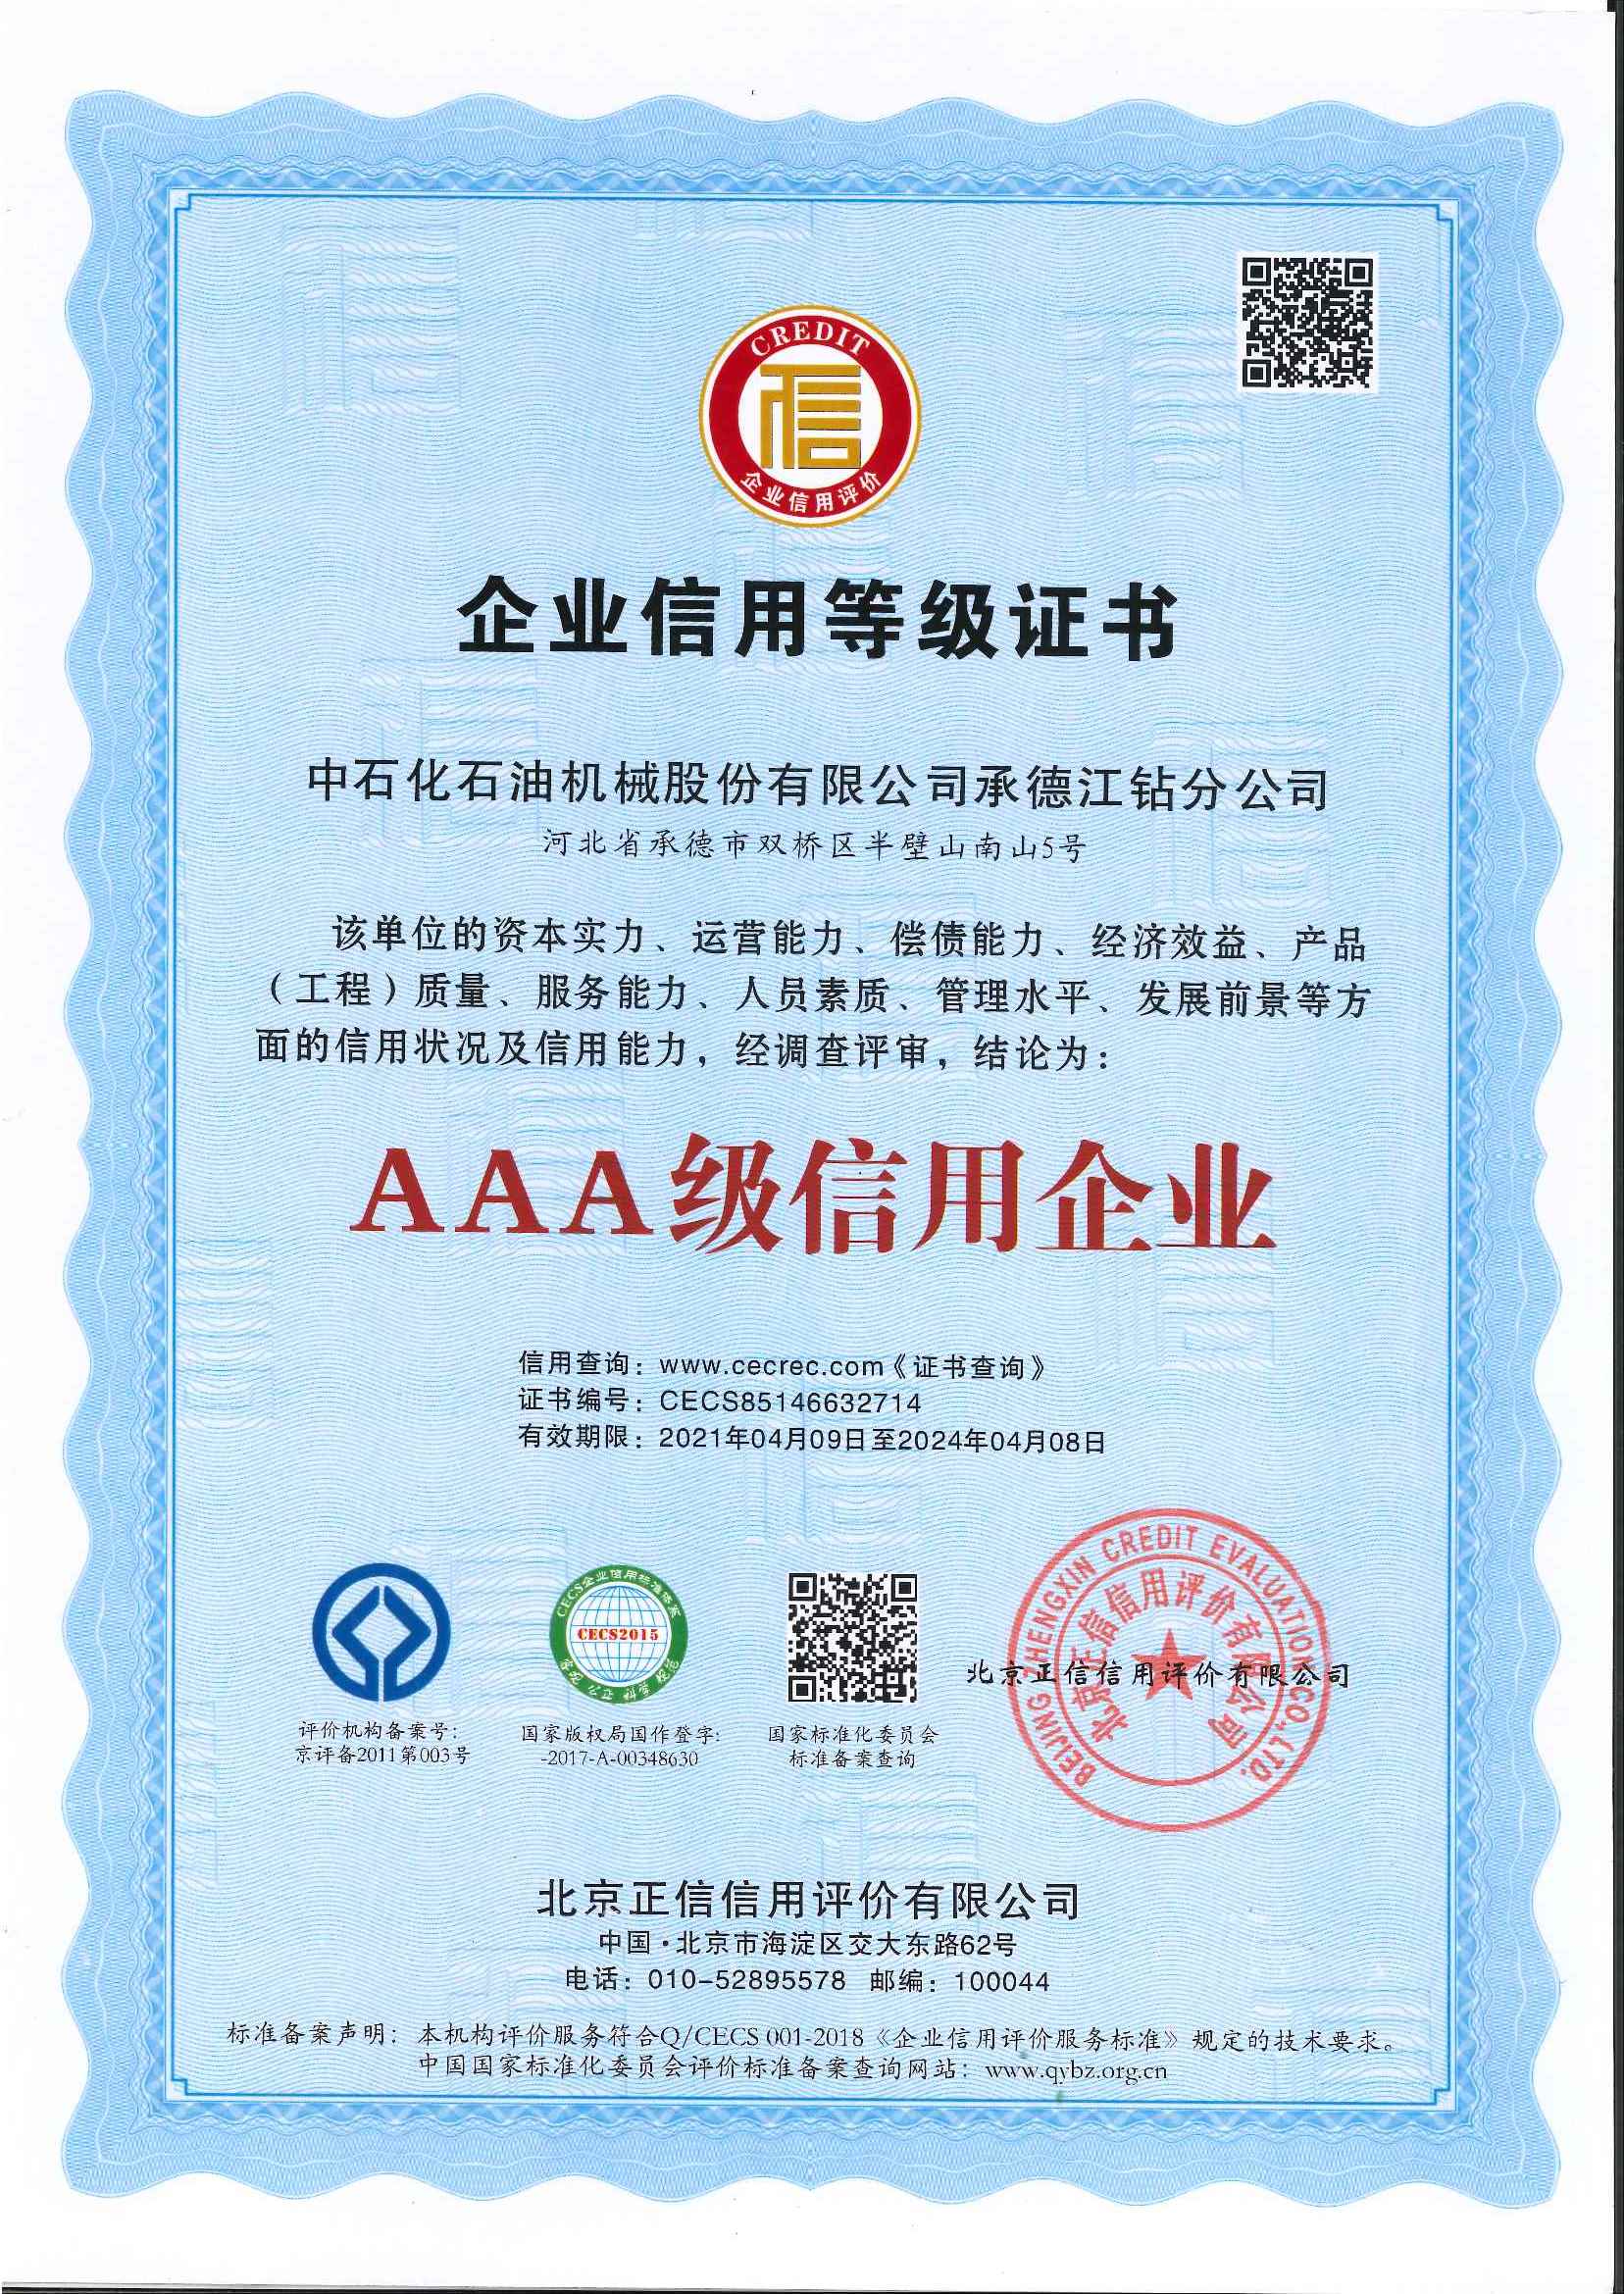 AAA Enterprise Credit Rating Certificate (kinesisk) 2024yv1